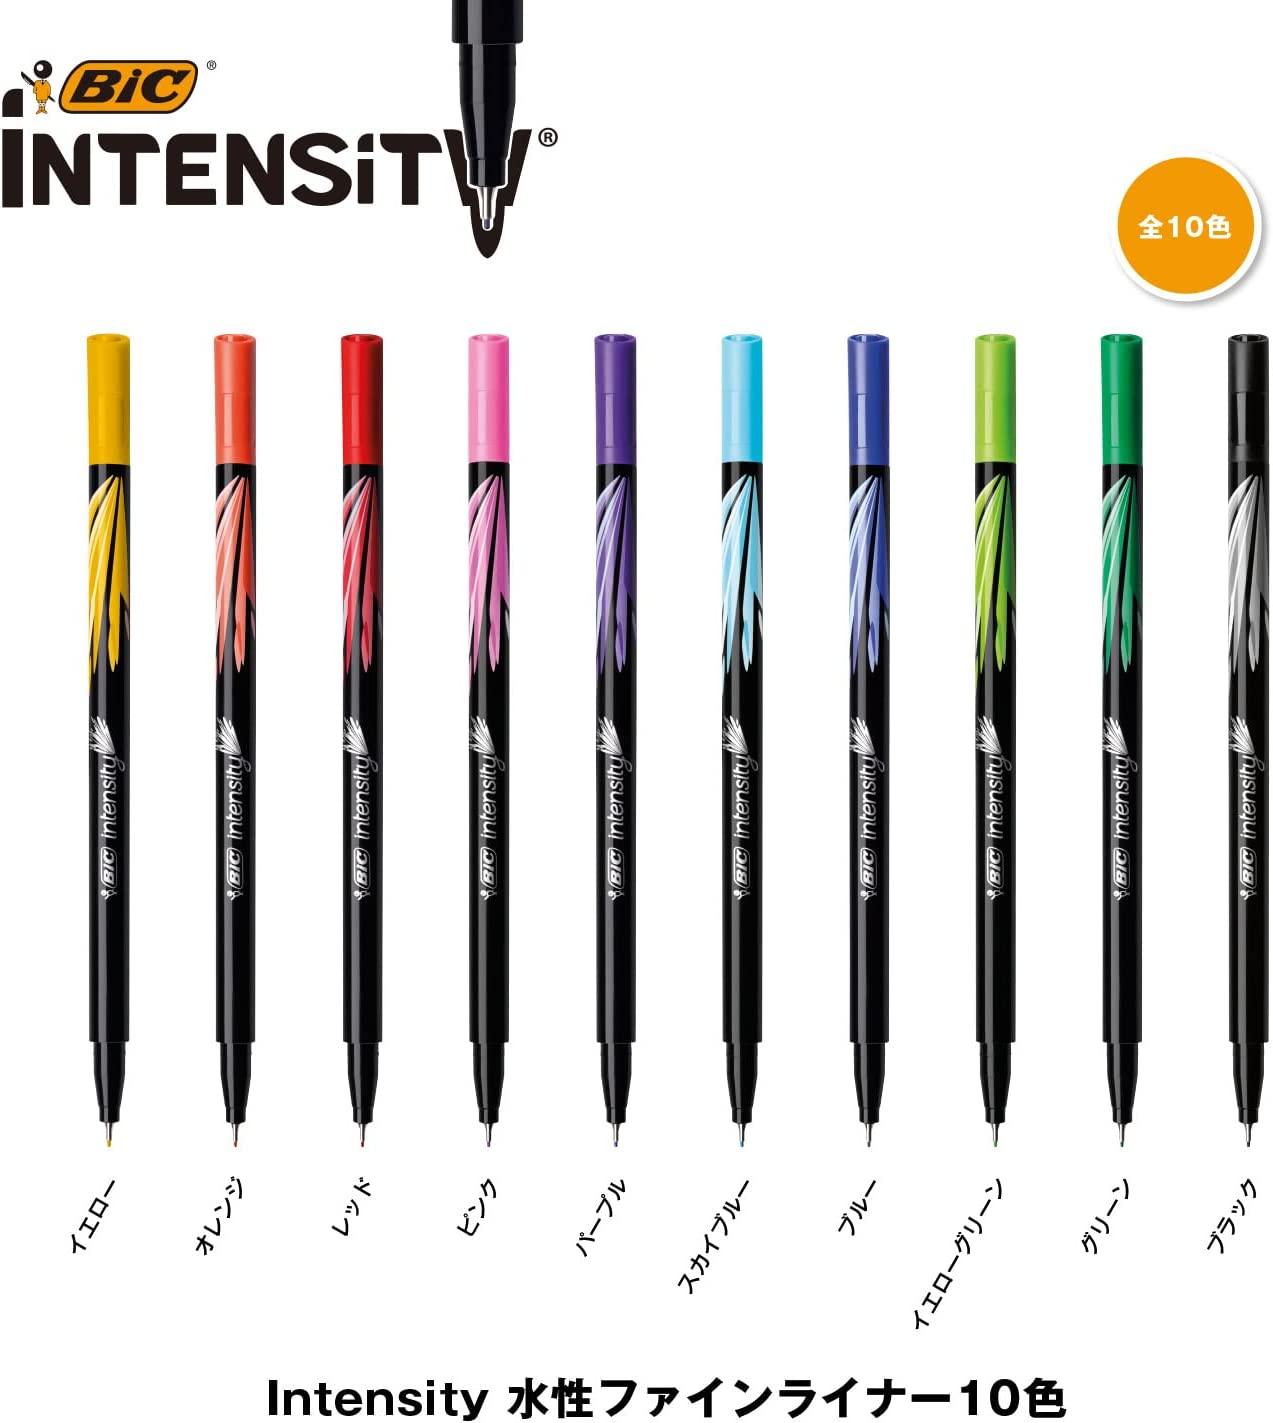 (Pre-Order) BIC Intensity Medium Felt-Tip pen 0.8mm Water-based pen  ITS-FEPMDPK12